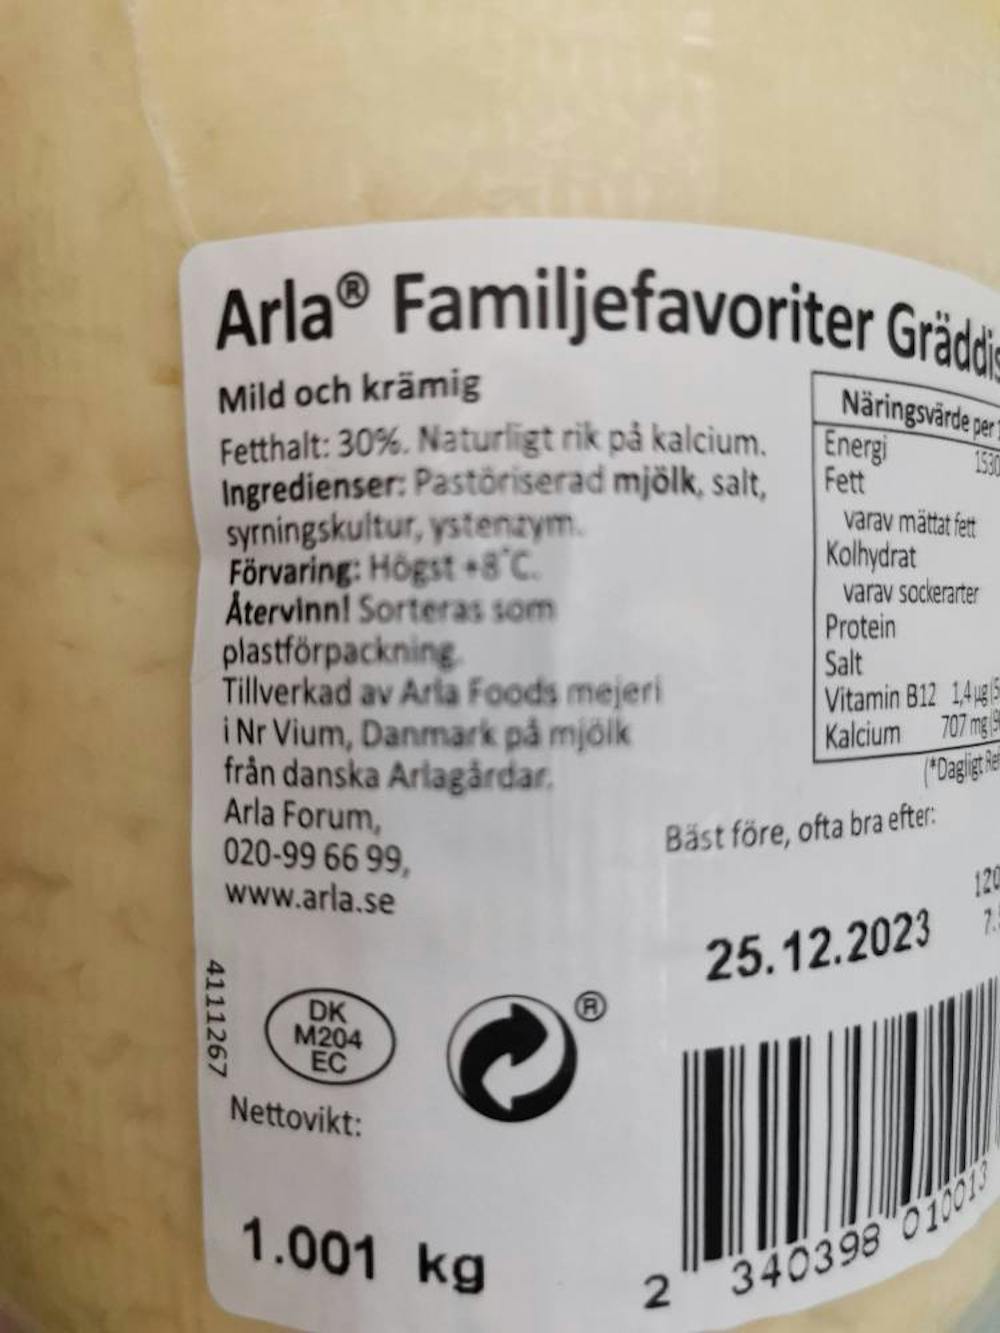 Ingrediensliste - Gräddis, Arla